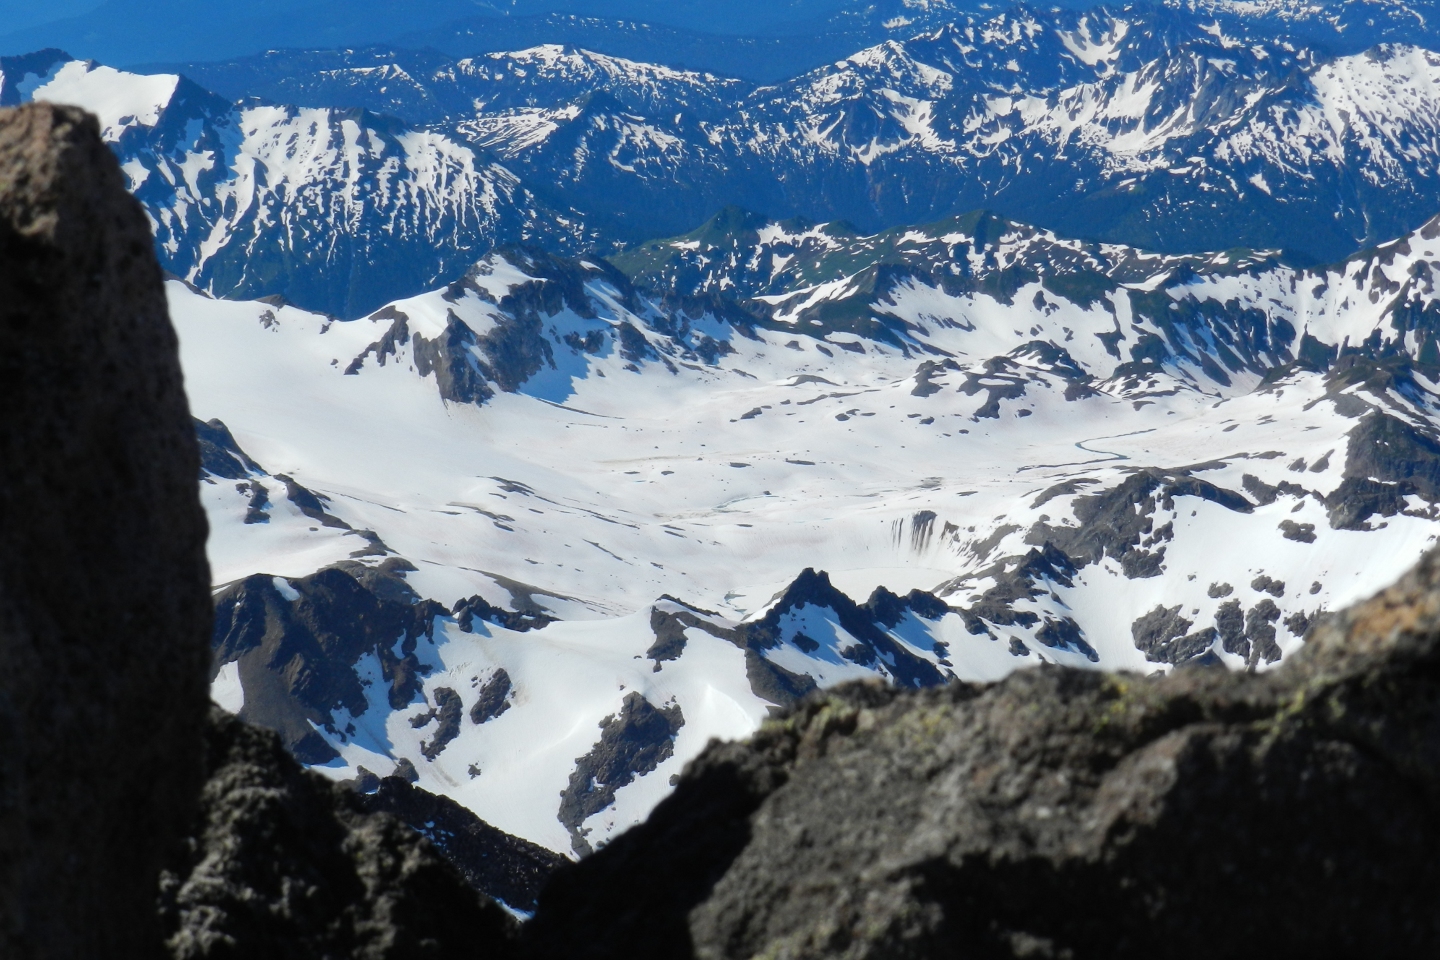 White Chuck Glacier Basin from the summit